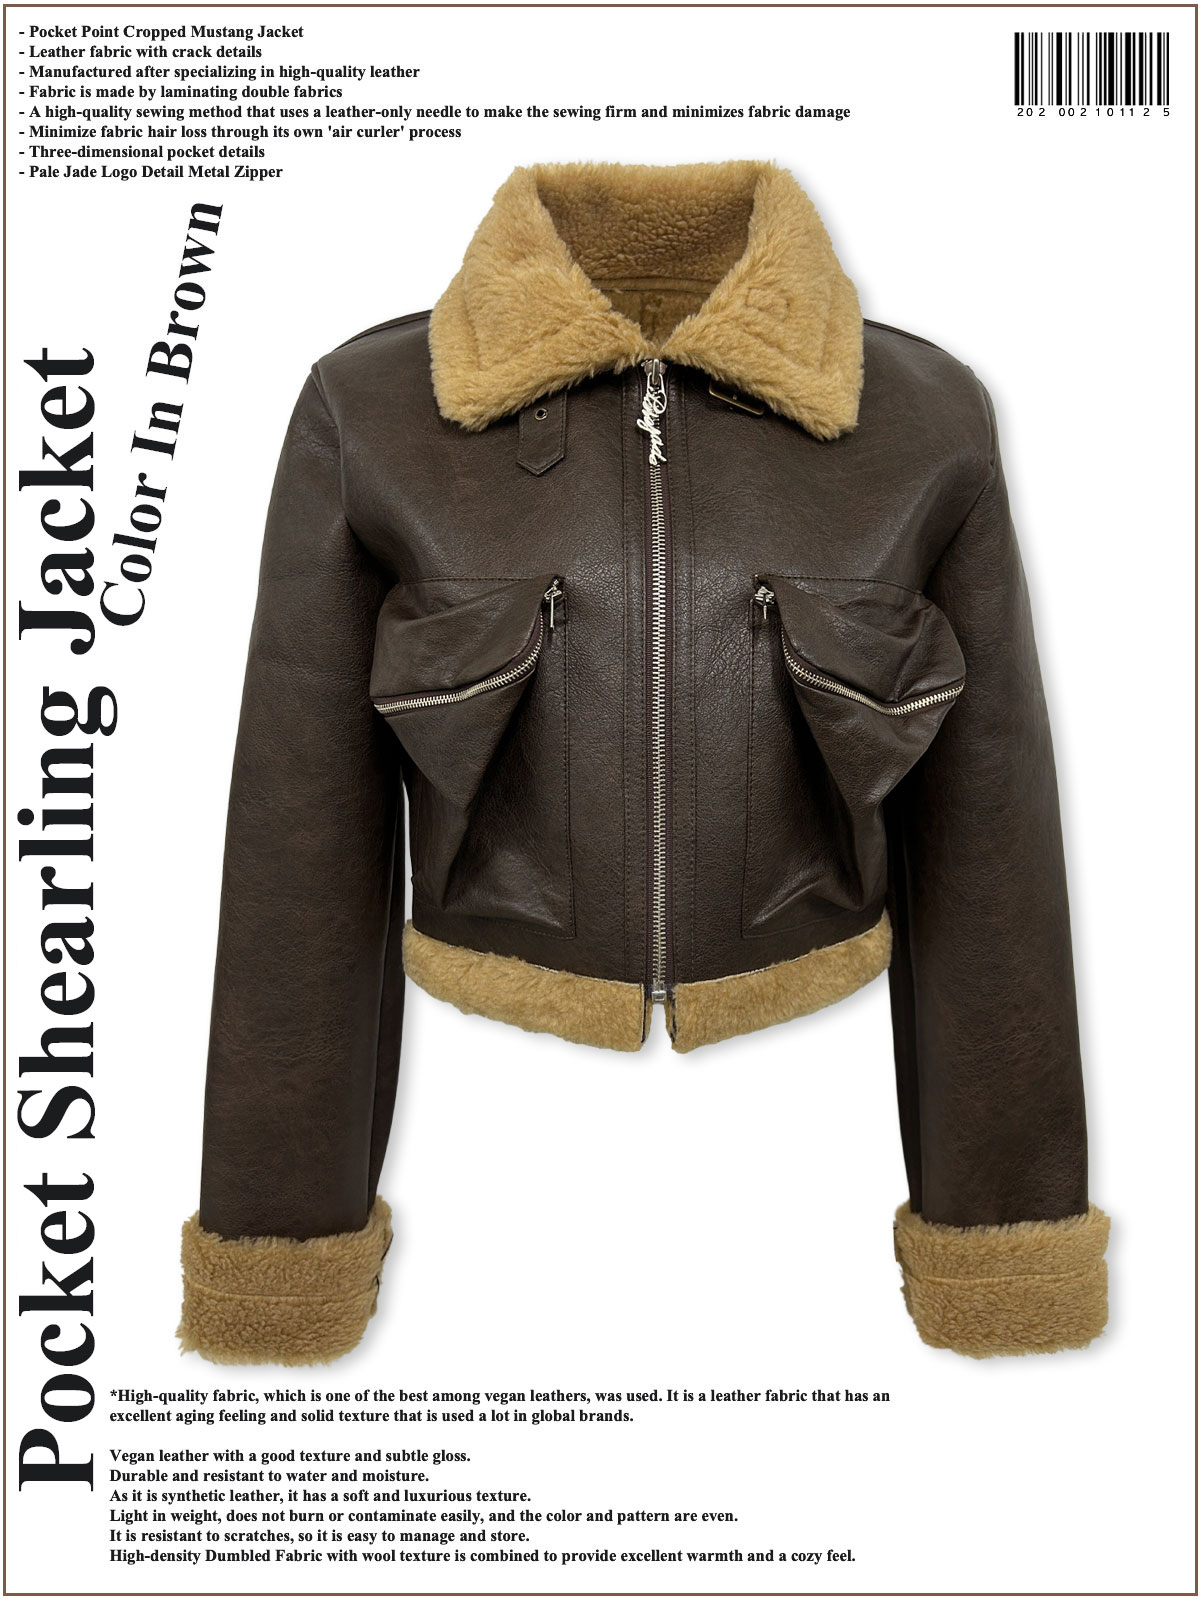 Pocket Shearling Jacket in Brown